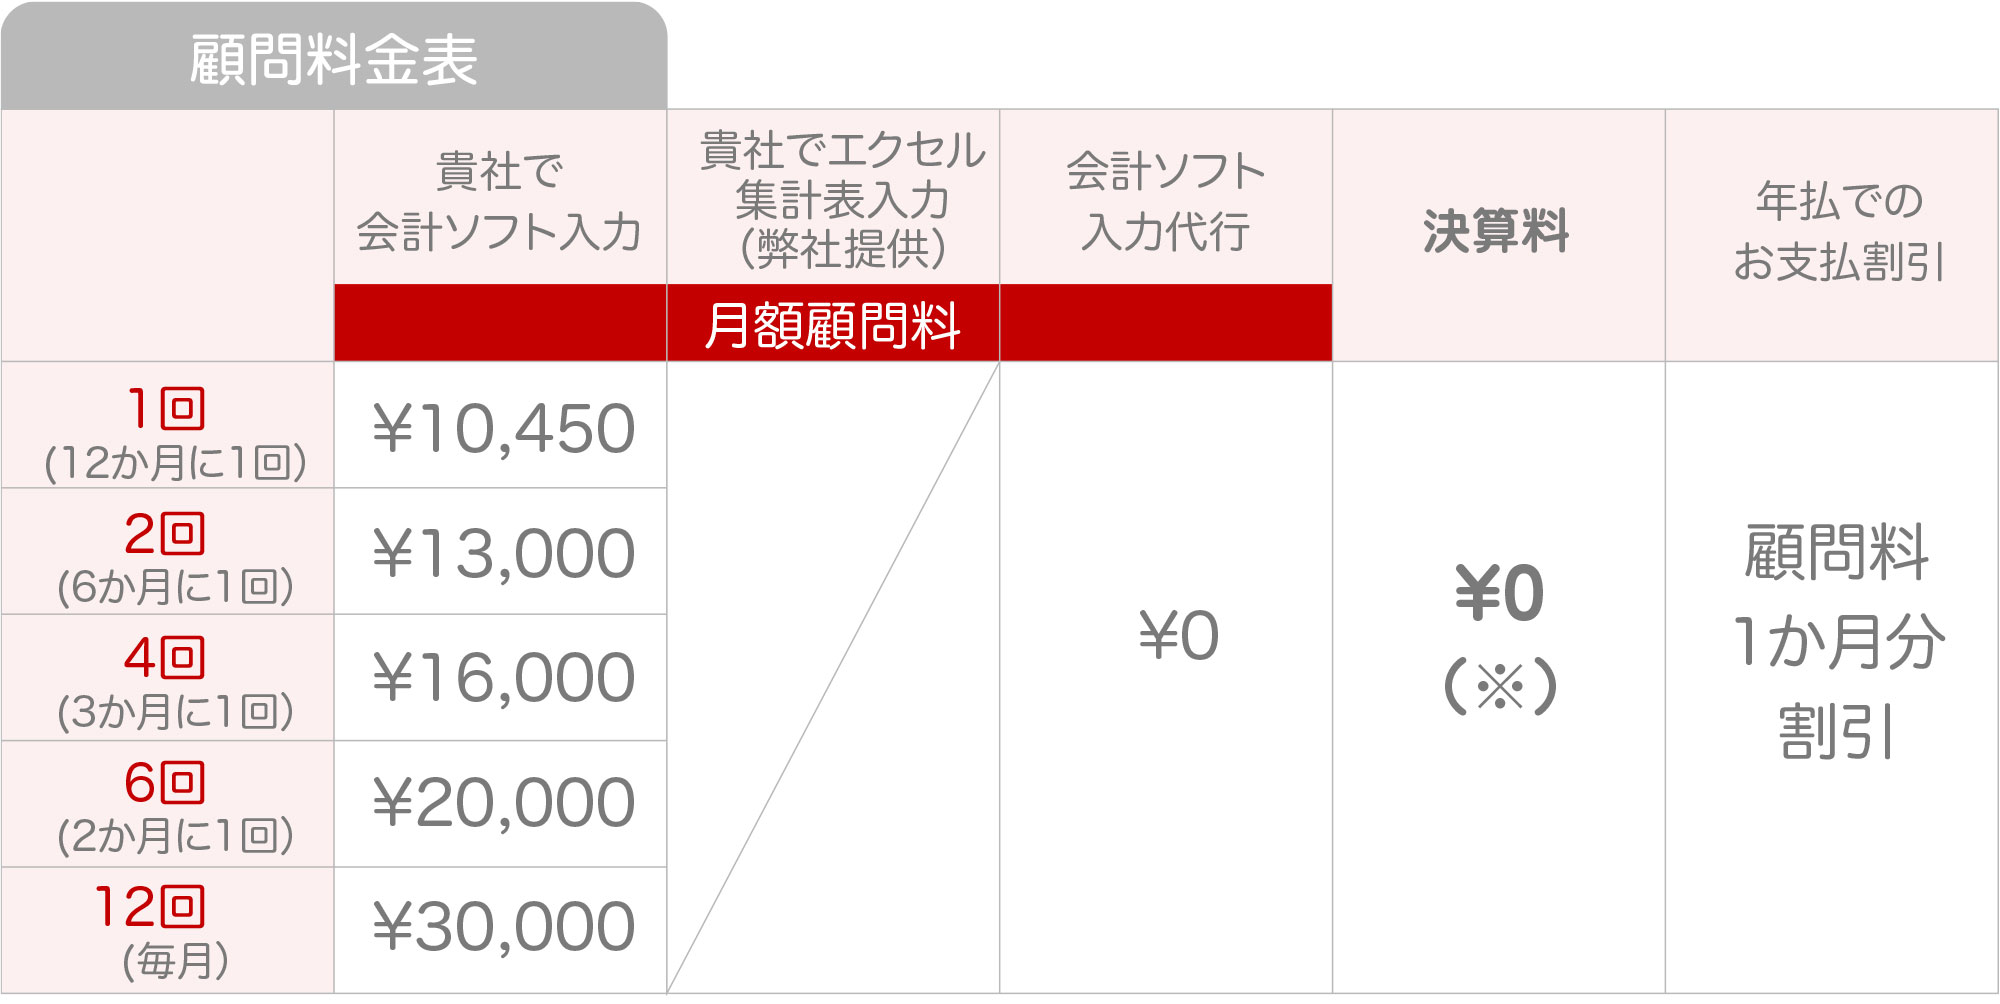 浅野会計事務所の金額・料金案内Aプラン顧問料金表